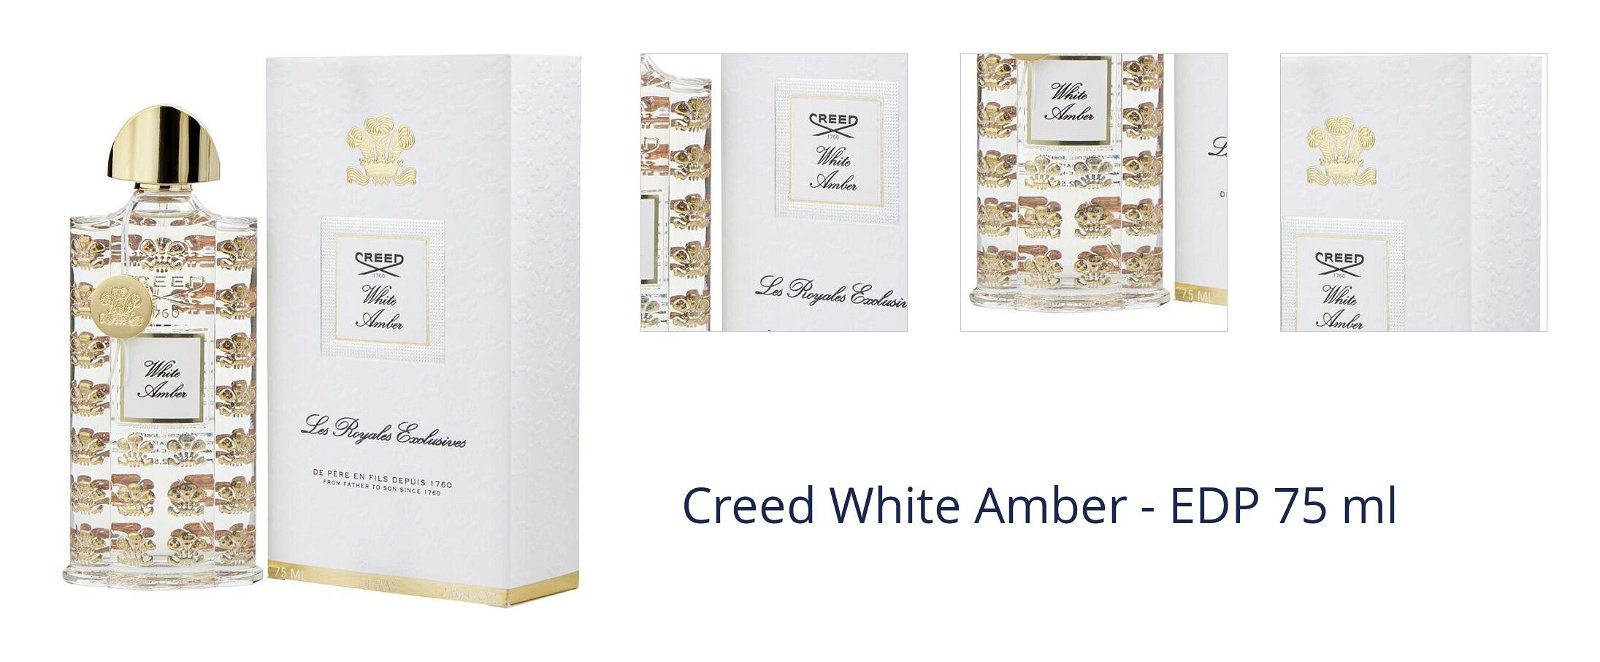 Creed White Amber - EDP 75 ml 1